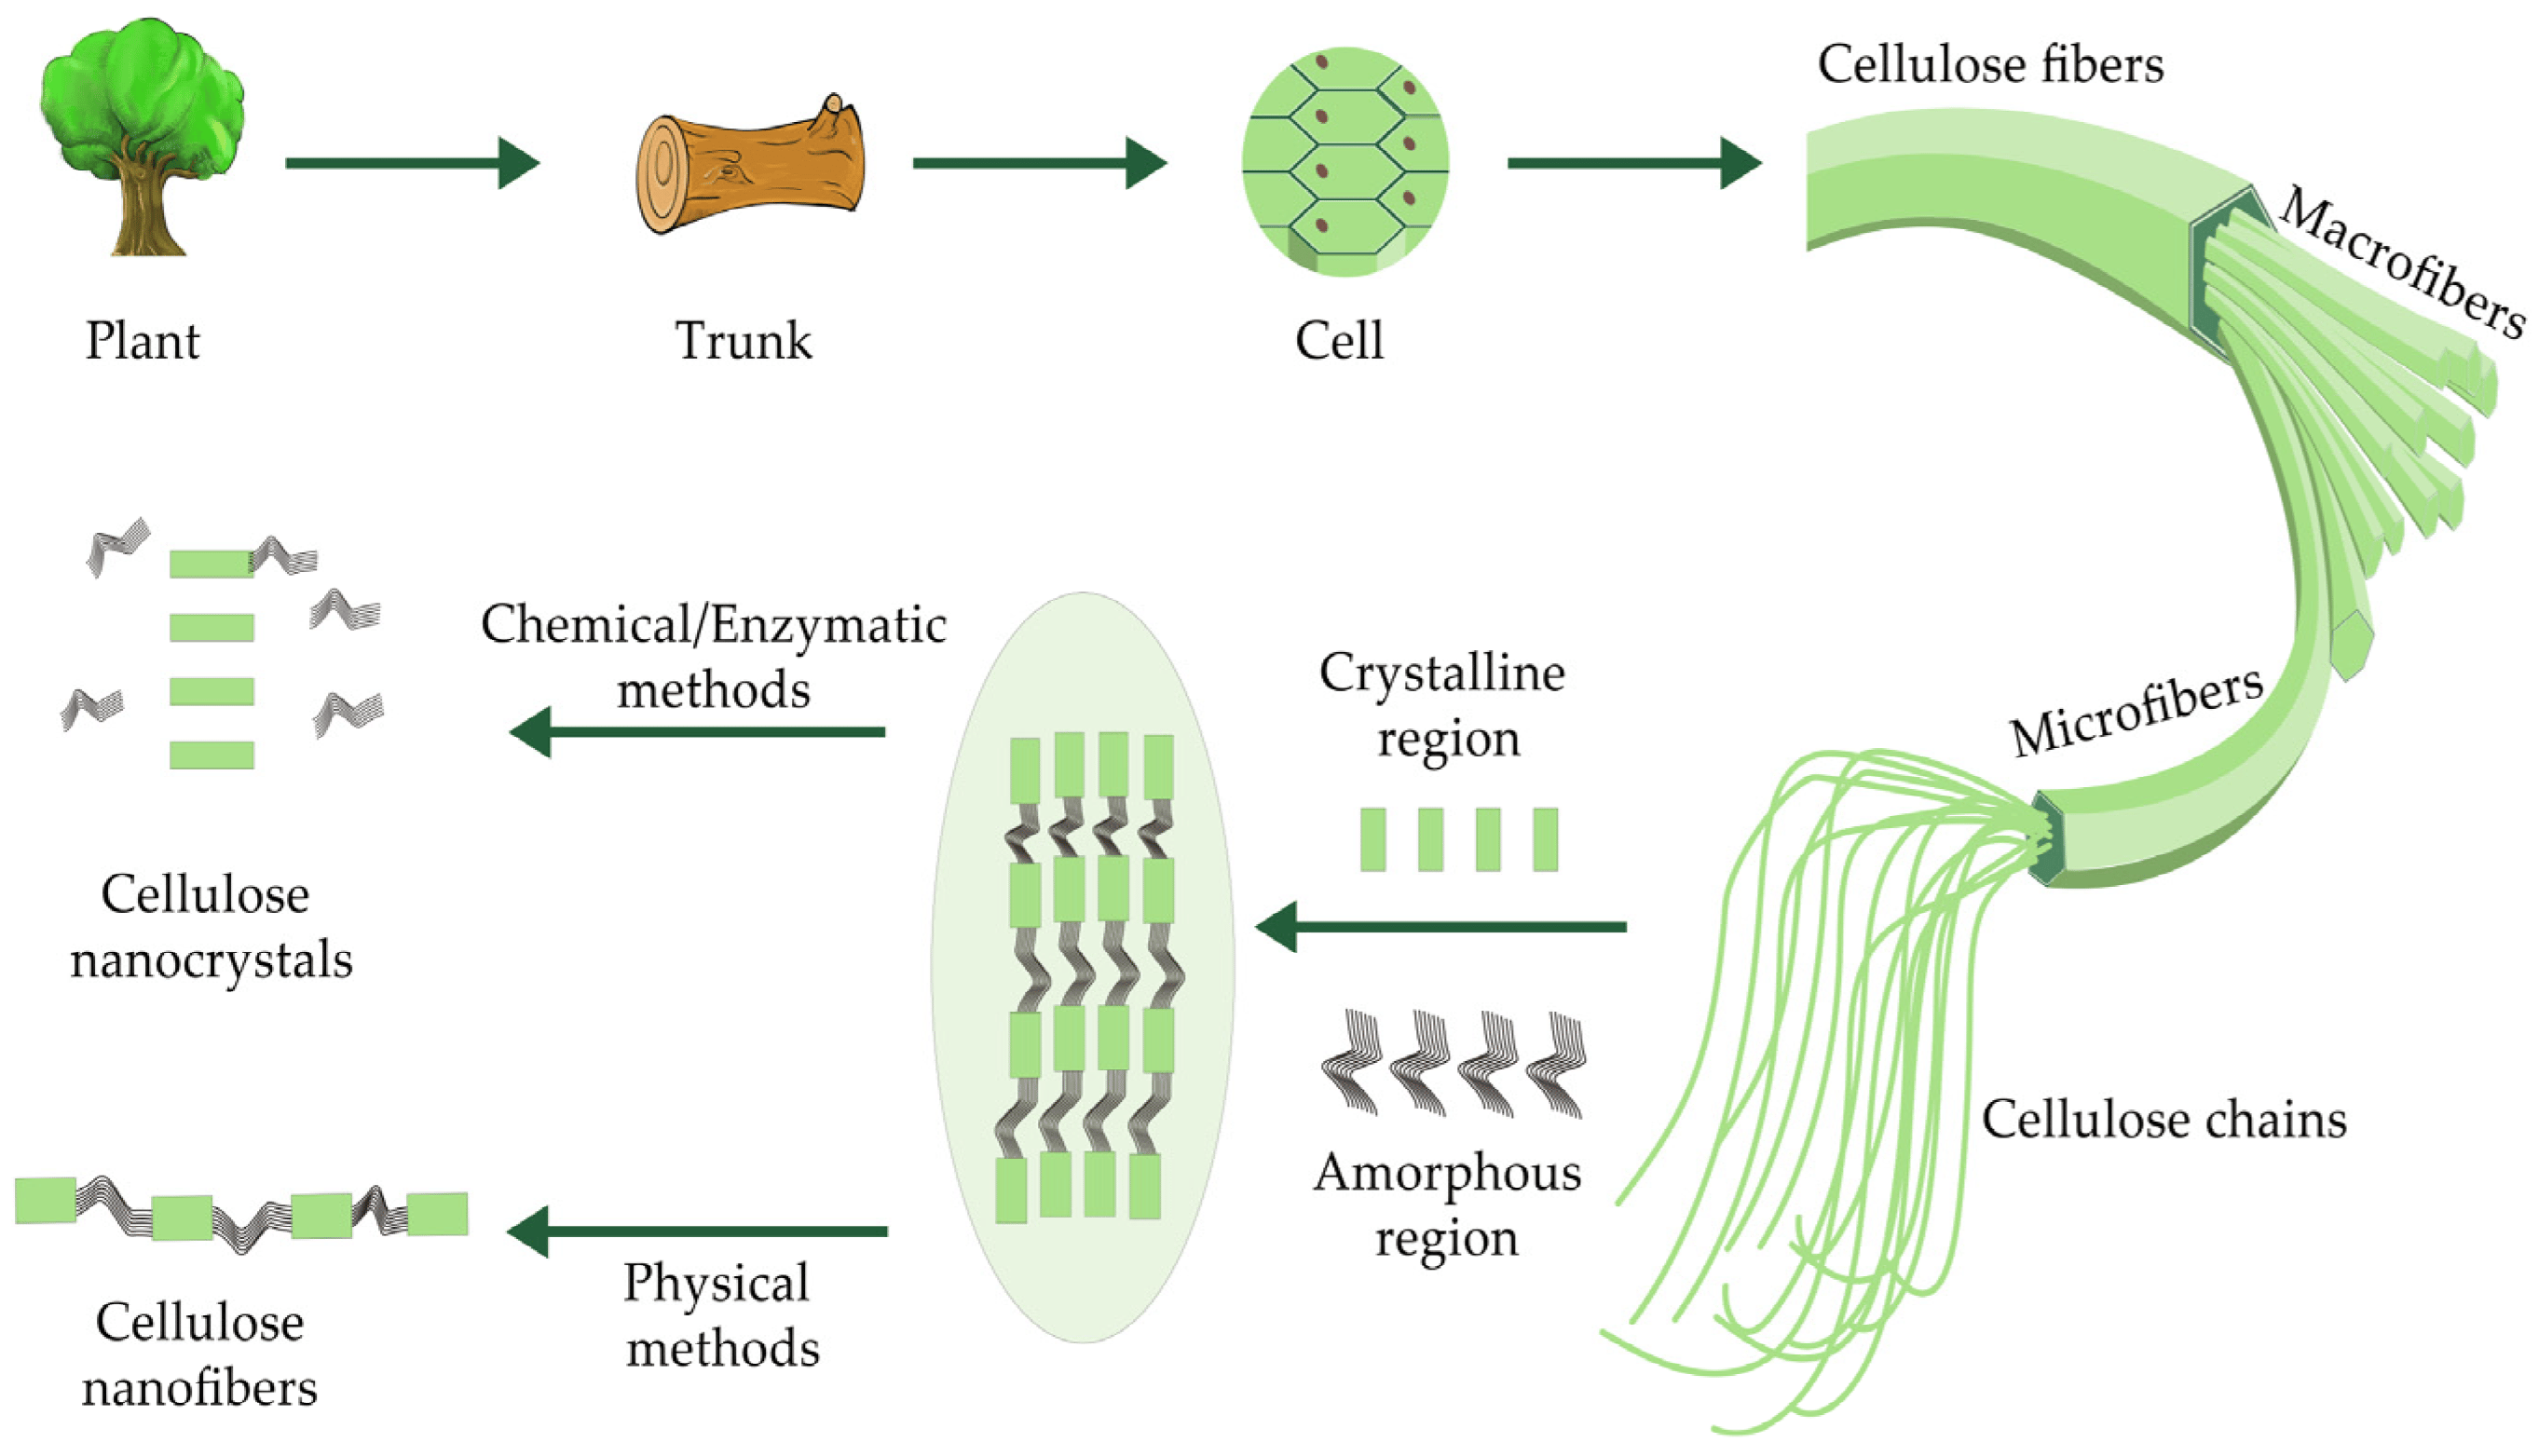 nanocellulose preparation from plants